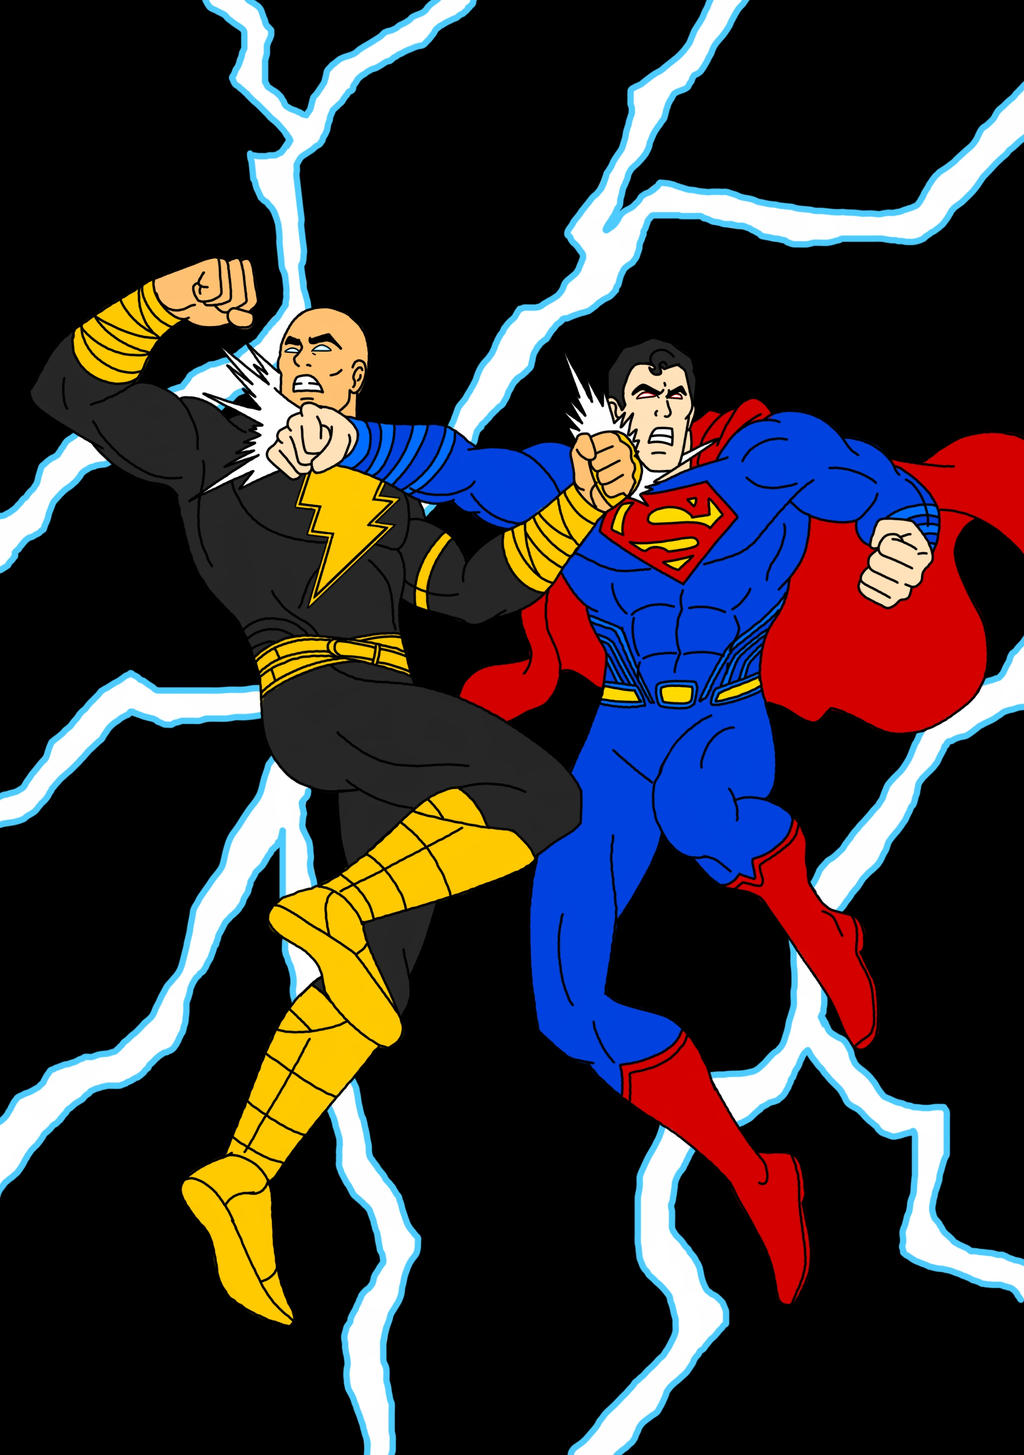 Superman vs Black Adam by Mohamme on DeviantArt